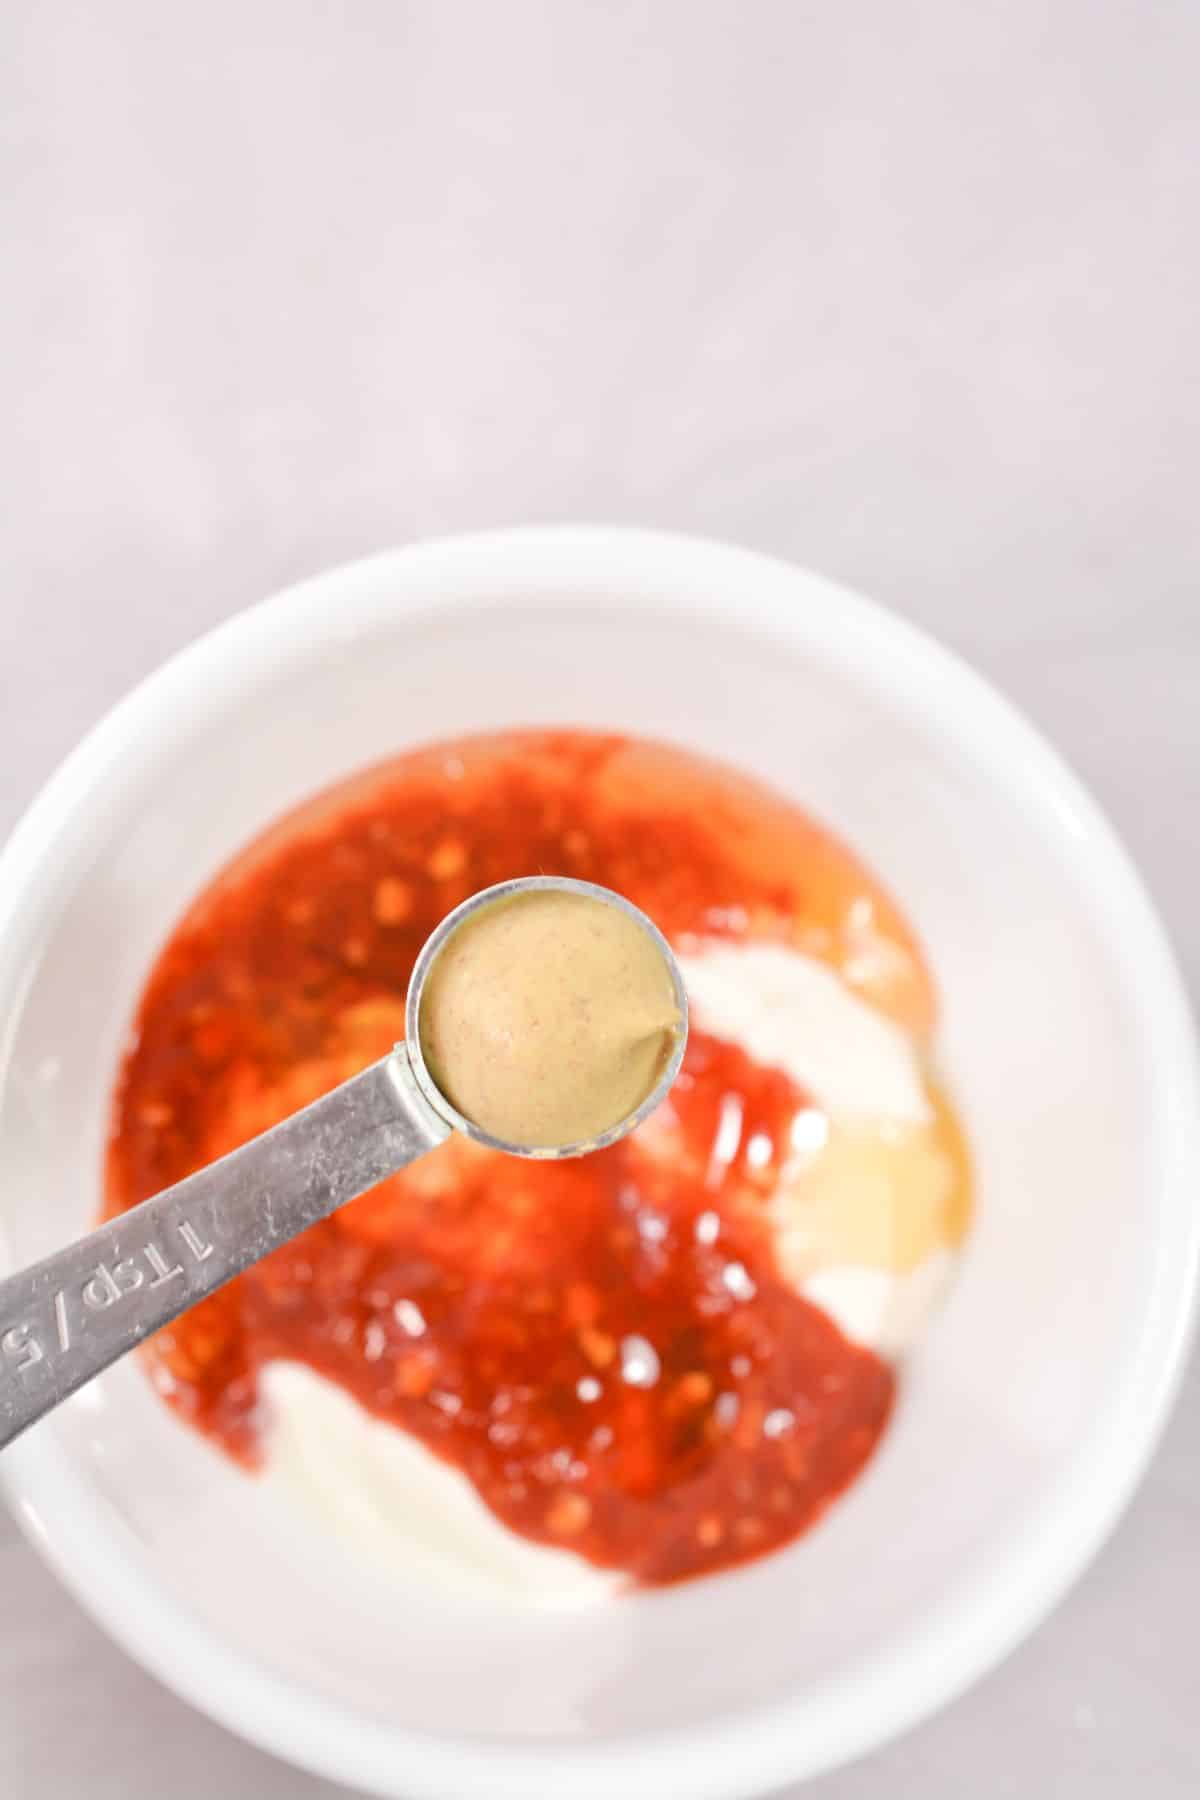 dijon mustard being added to Mayo, sour cream, chili garlic sauce, sugar-free honey in a bowl